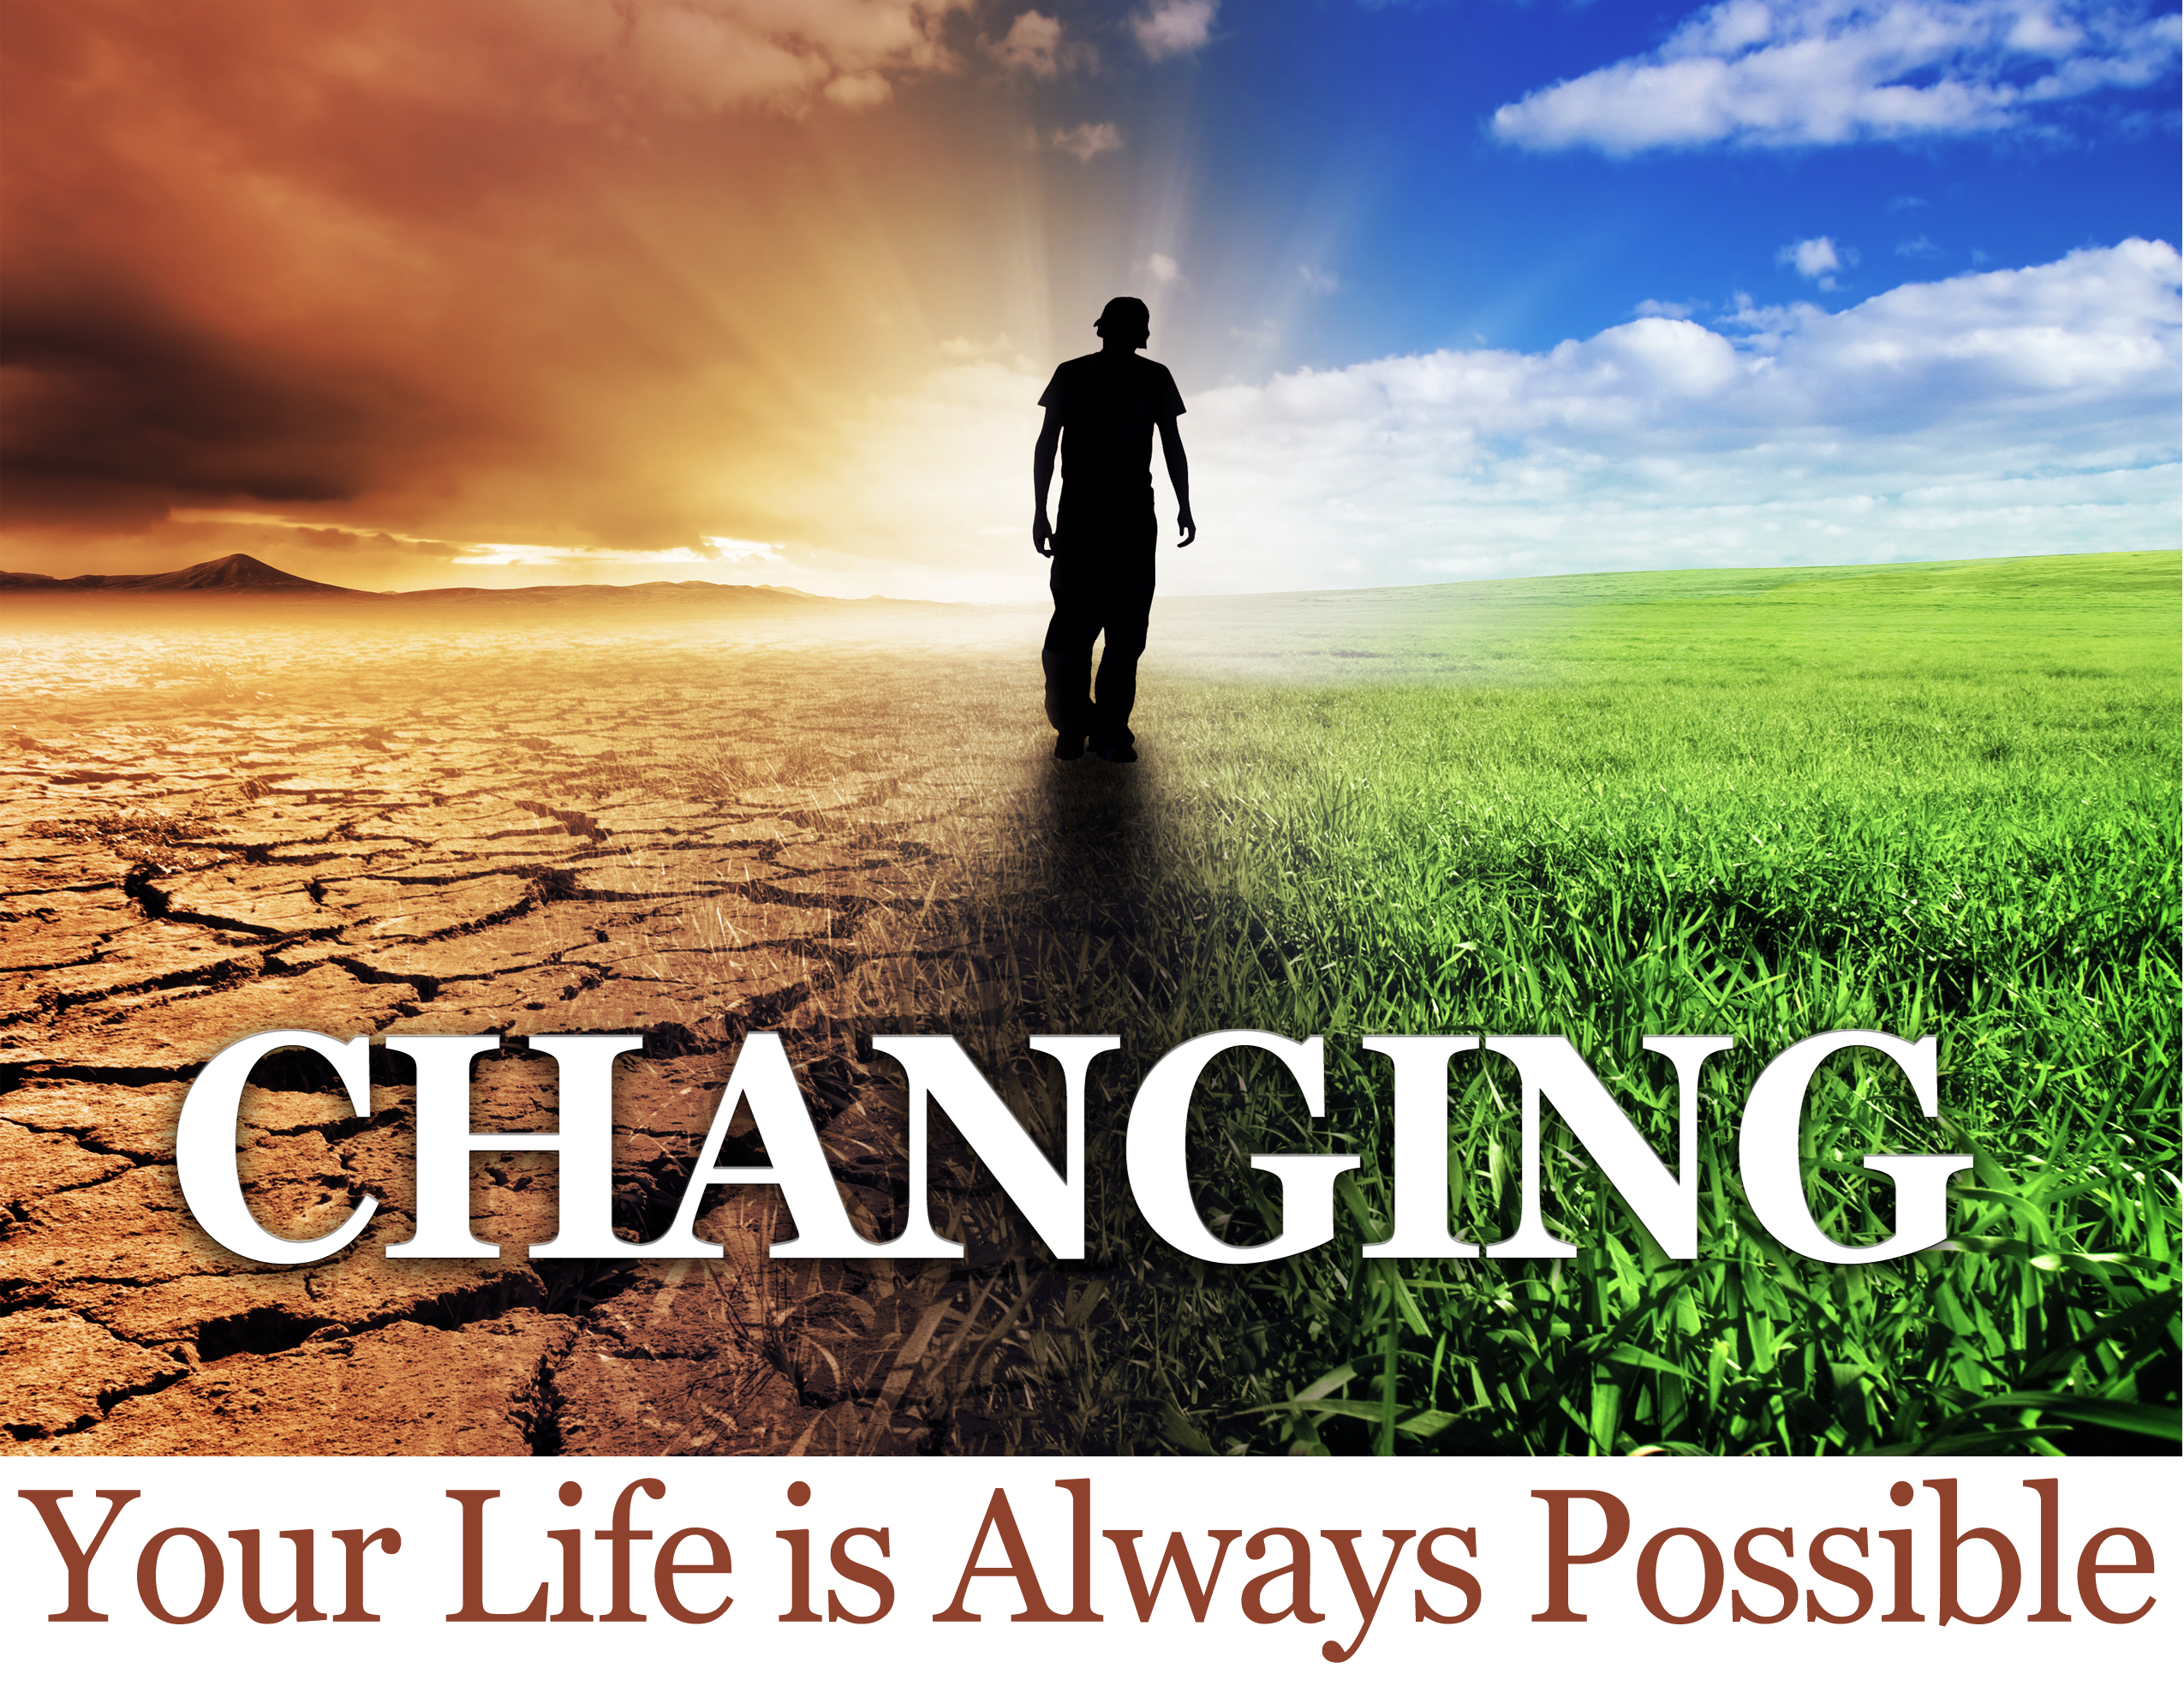 Ways to change life